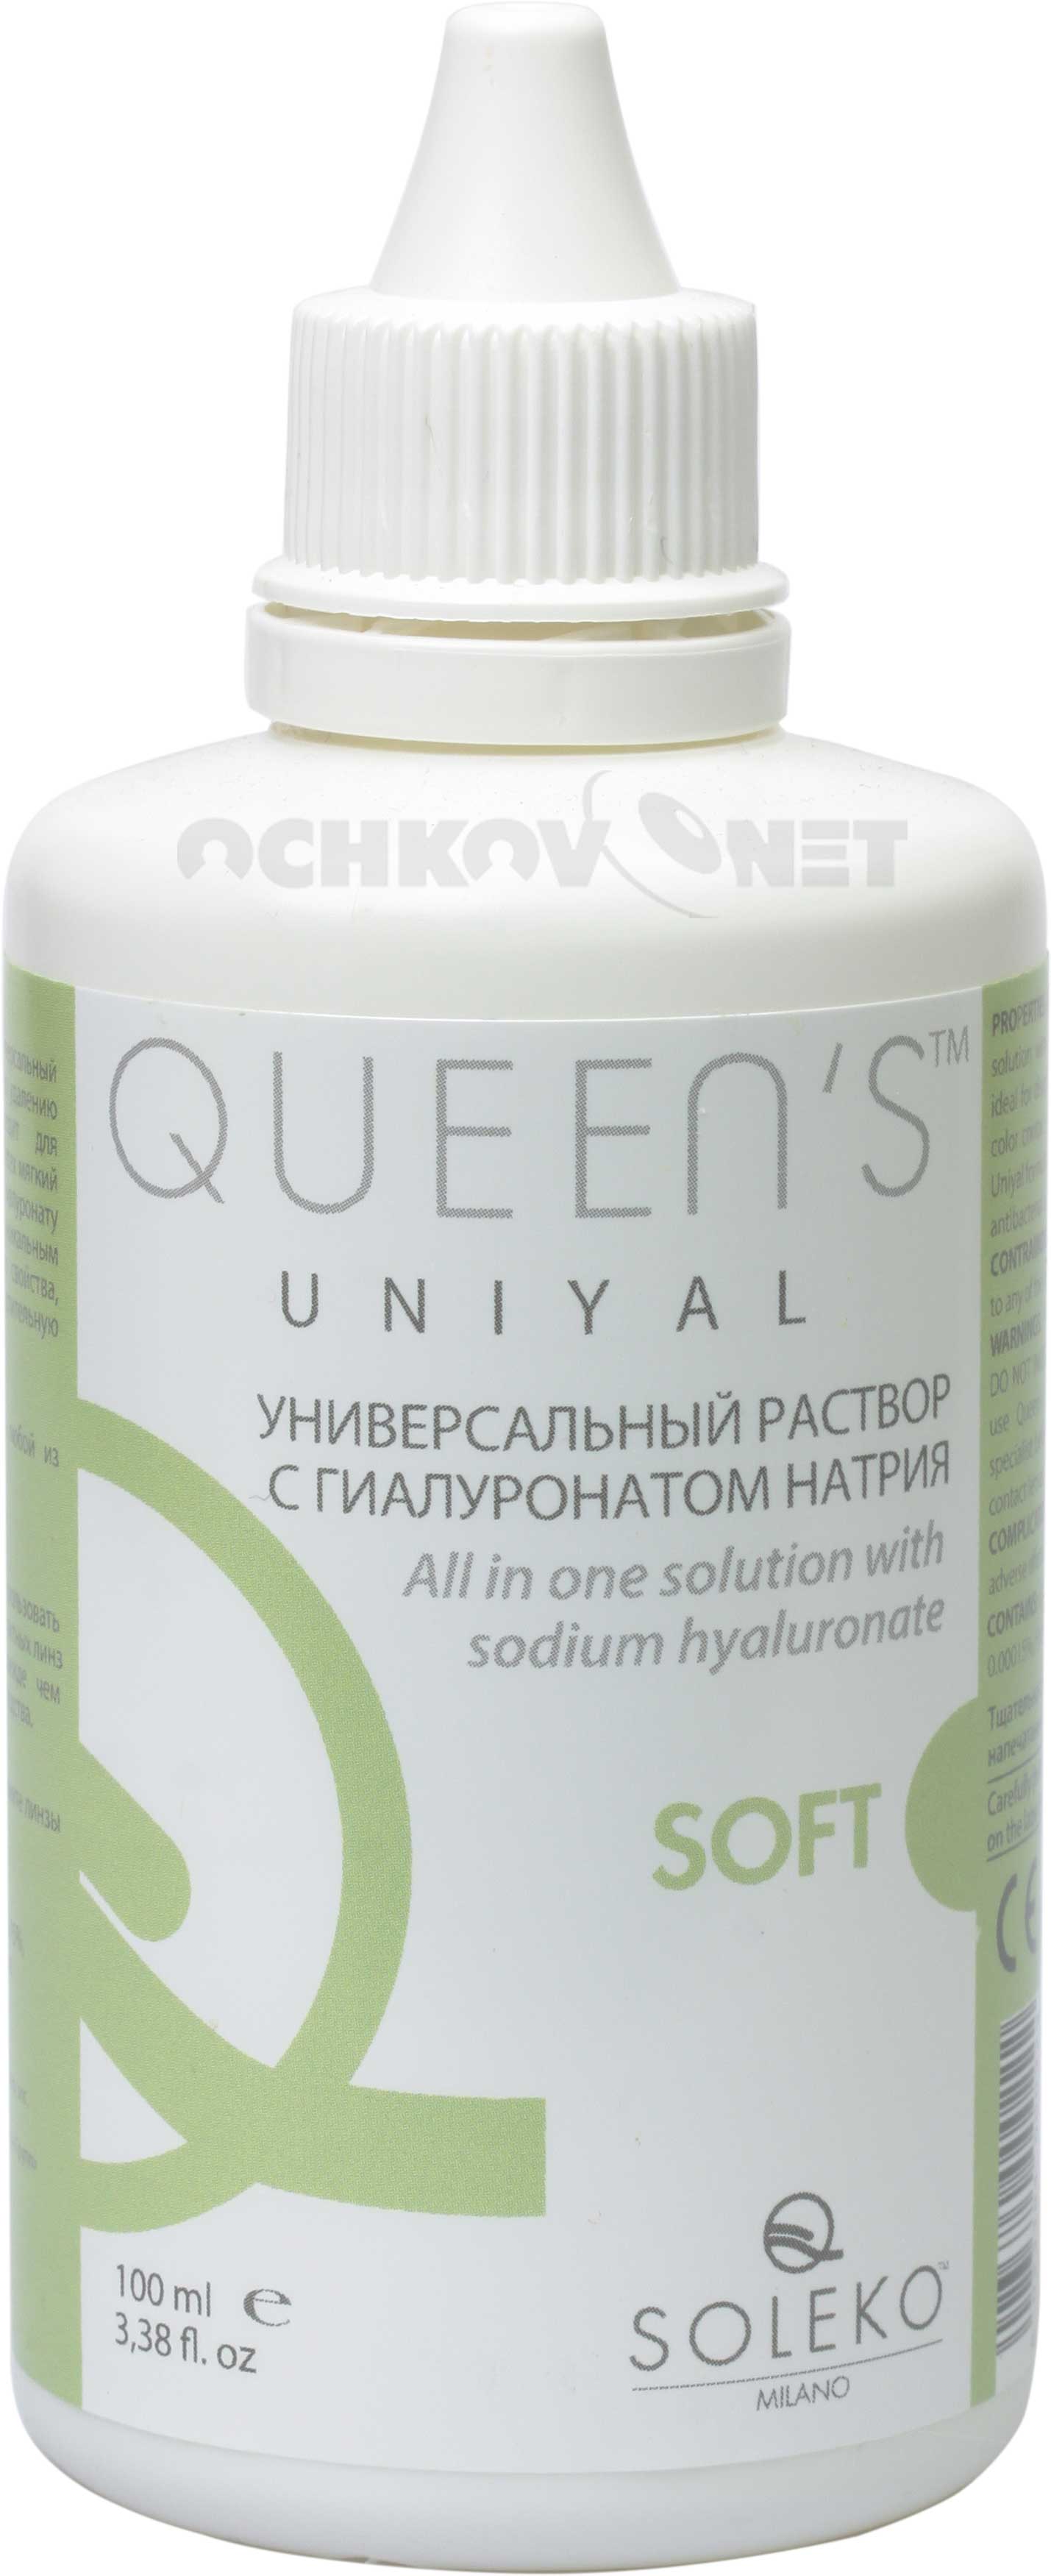 Queen’s UniYal Queen’s UniYal 100 мл, Soleko S.P.A  - купить со скидкой